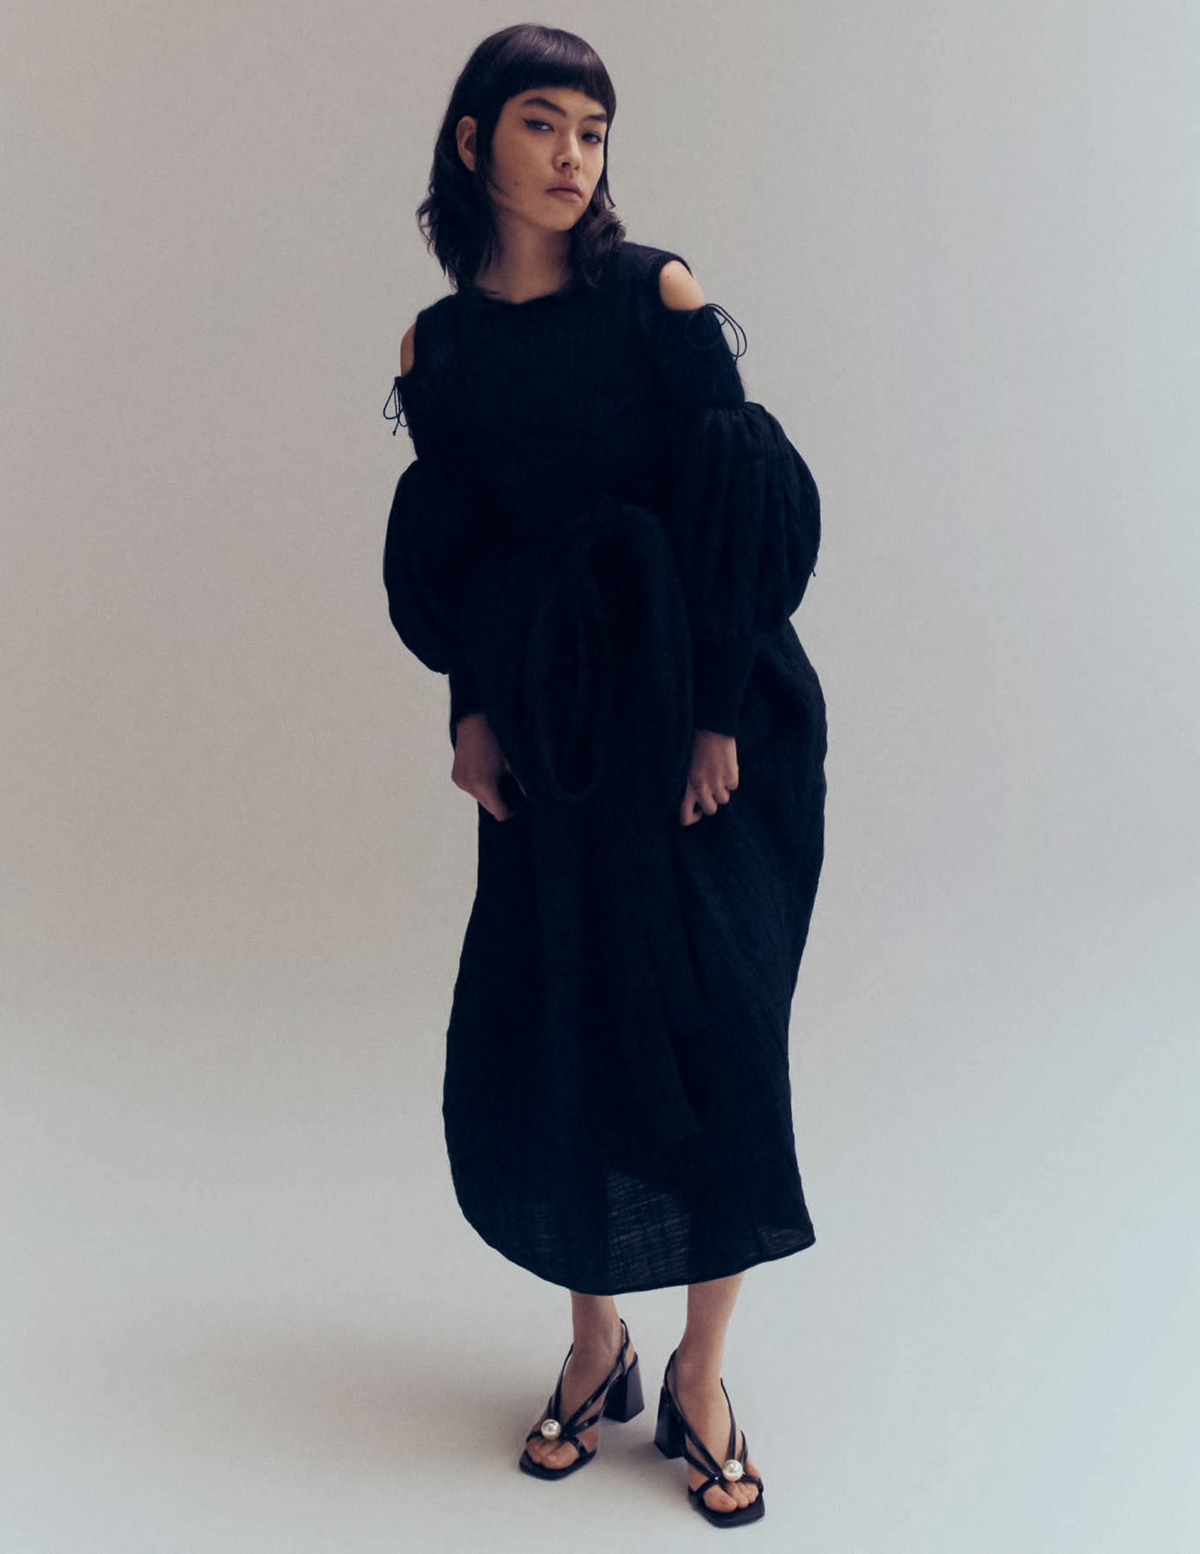 Maryel Uchida by Rahel Weiss for Vogue Germany November 2021